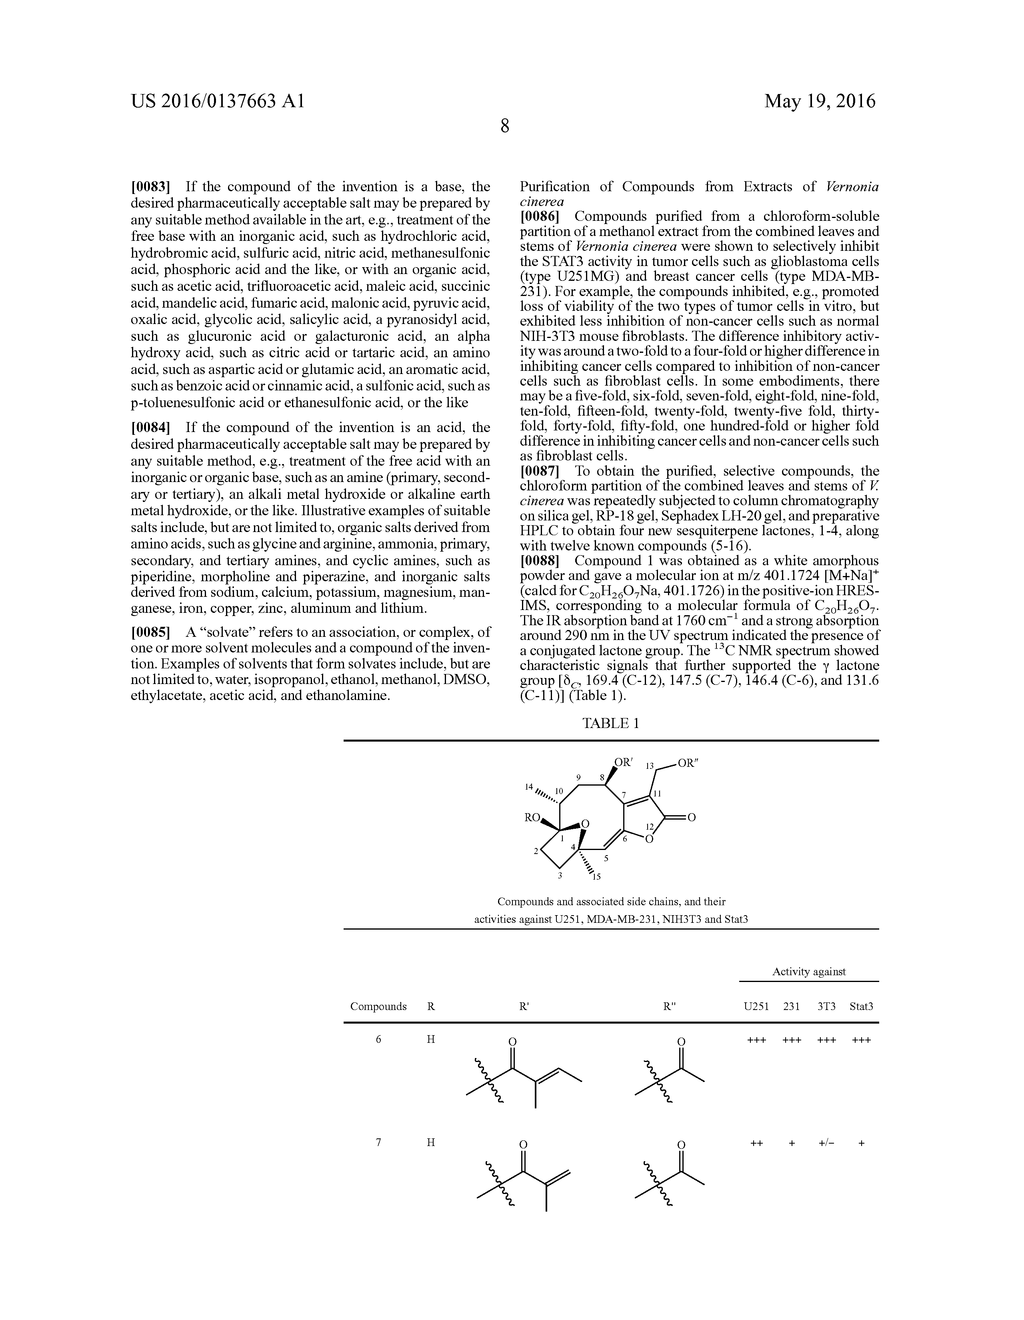 NOVEL SESQUITERPENOID STAT3 INHIBITORS - diagram, schematic, and image 44